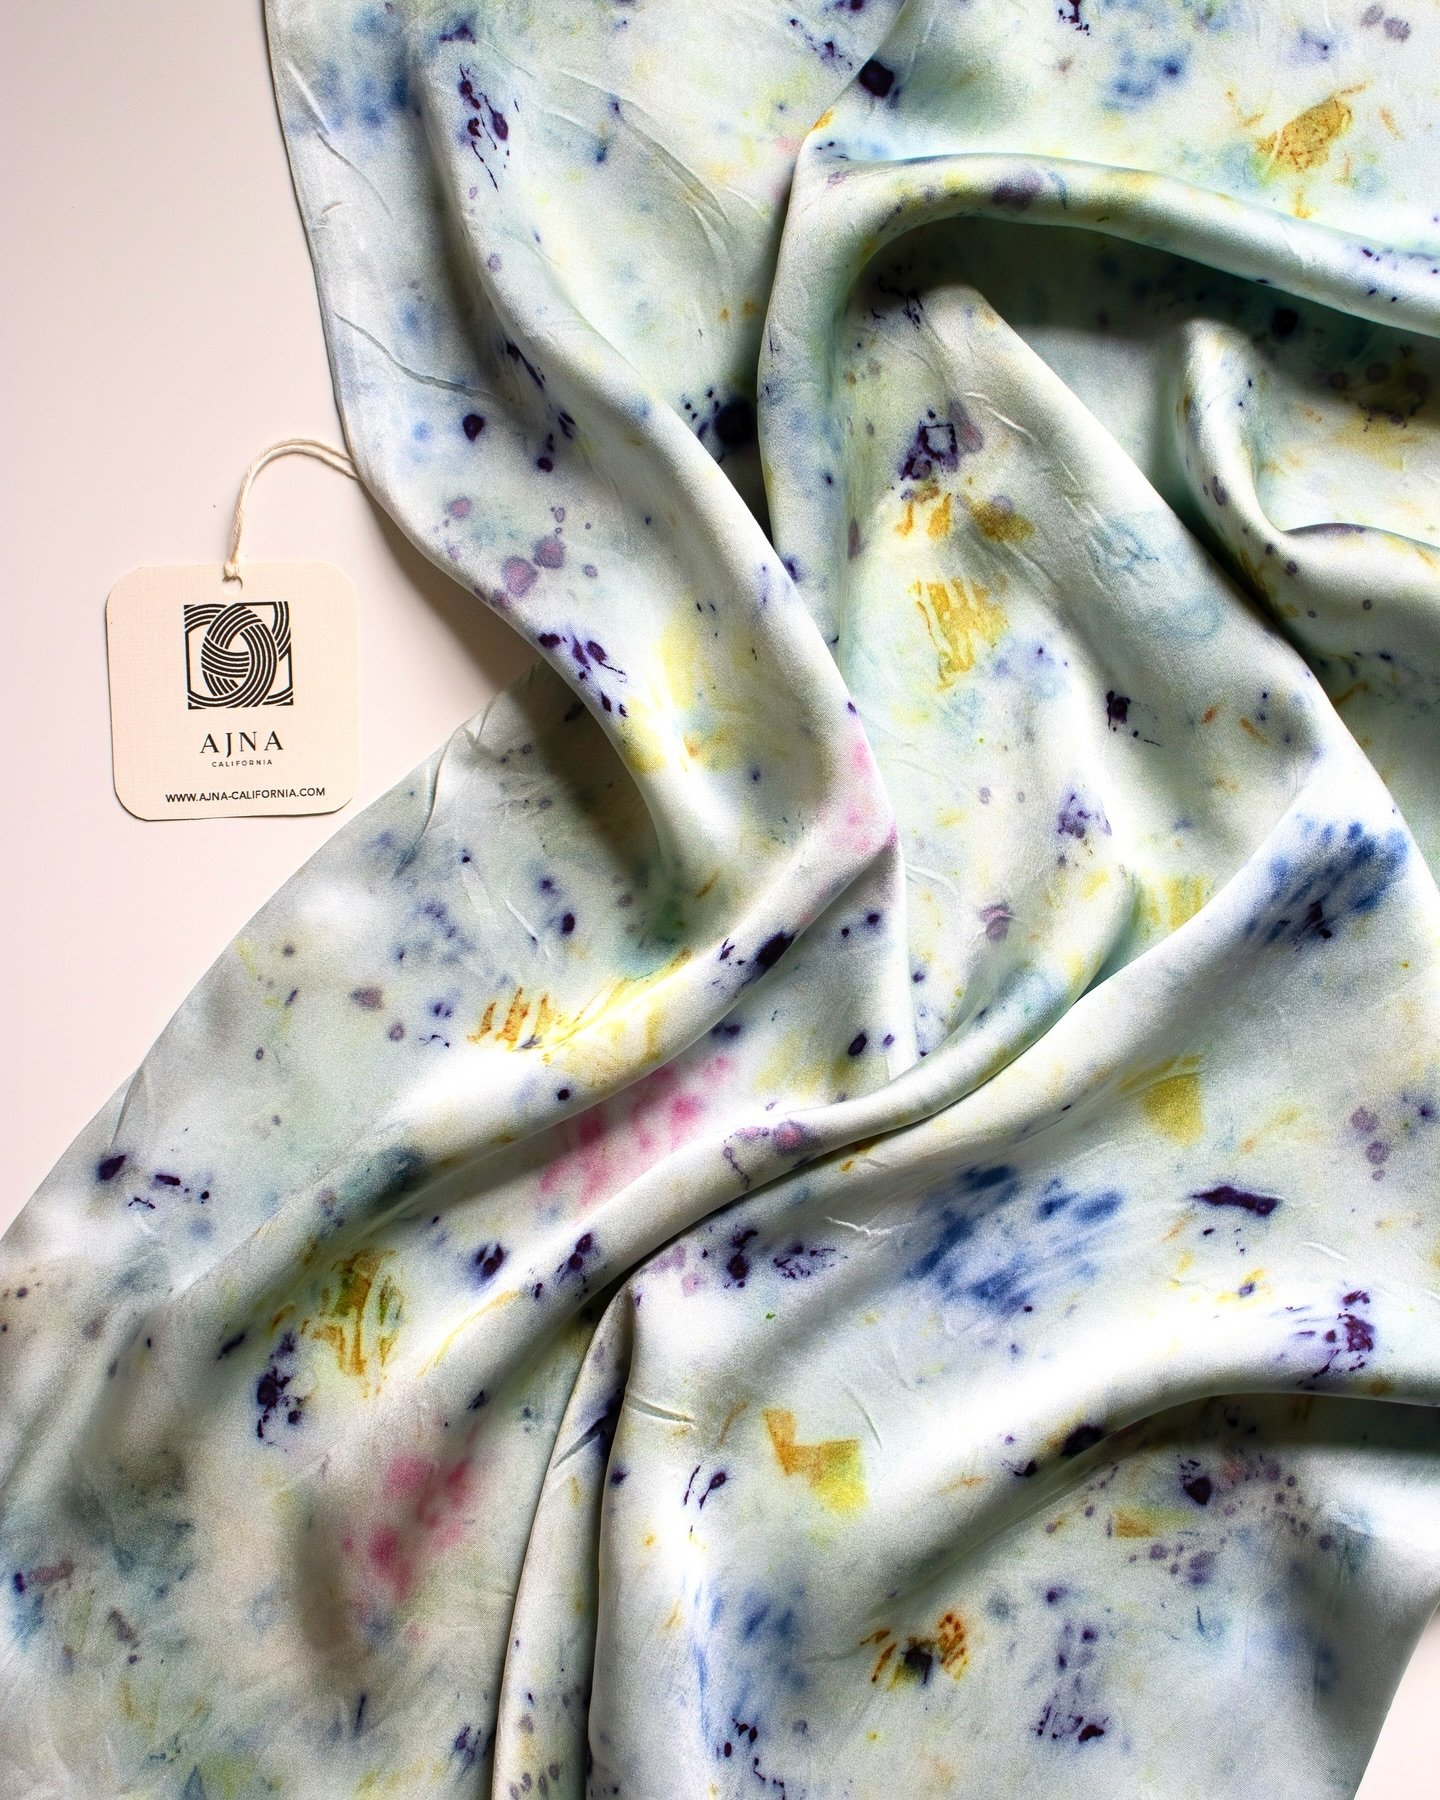 Botanically dyed silk pillowcase🪻

#botanicallydyed #silkpillowcase #ecoprinted #oneofakind #ajnacalifornia #shoplocalsj